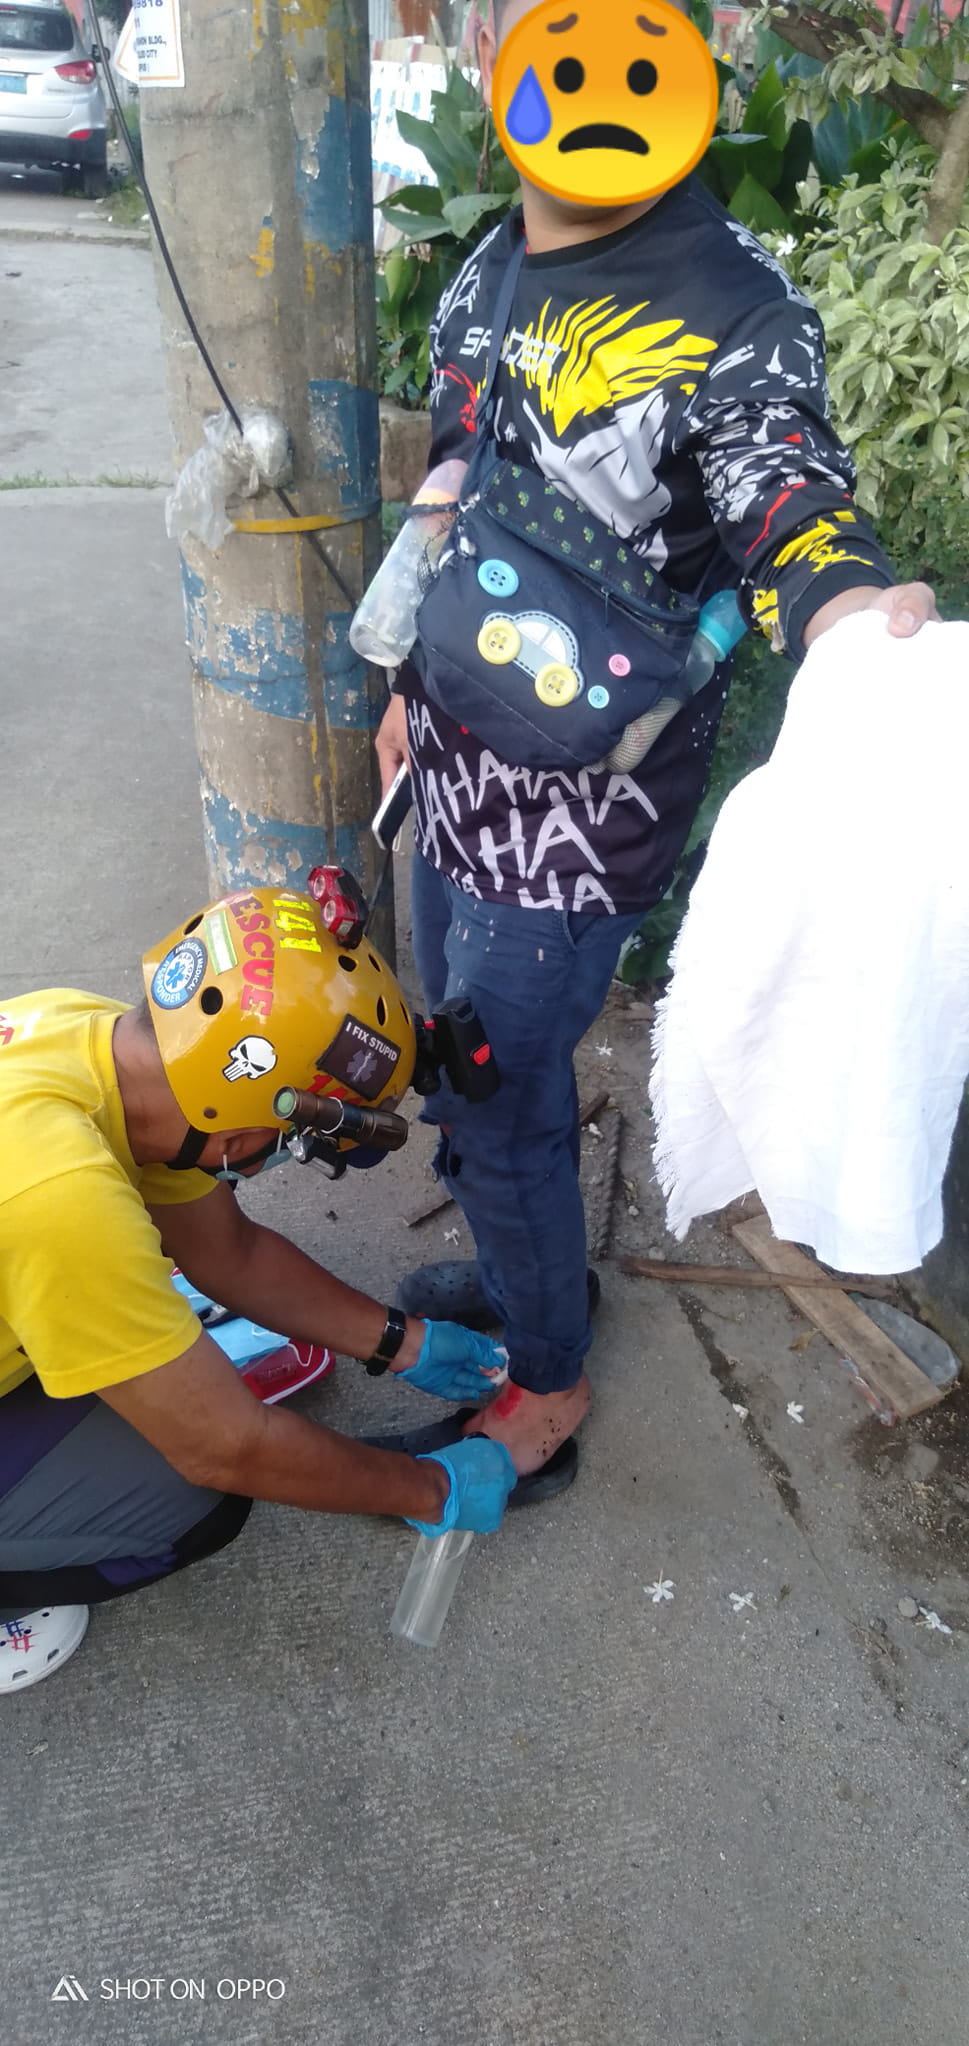 EMR Raptor volunteer responded road accident involving motorcycle – Mario Eleno Canoy Jr.